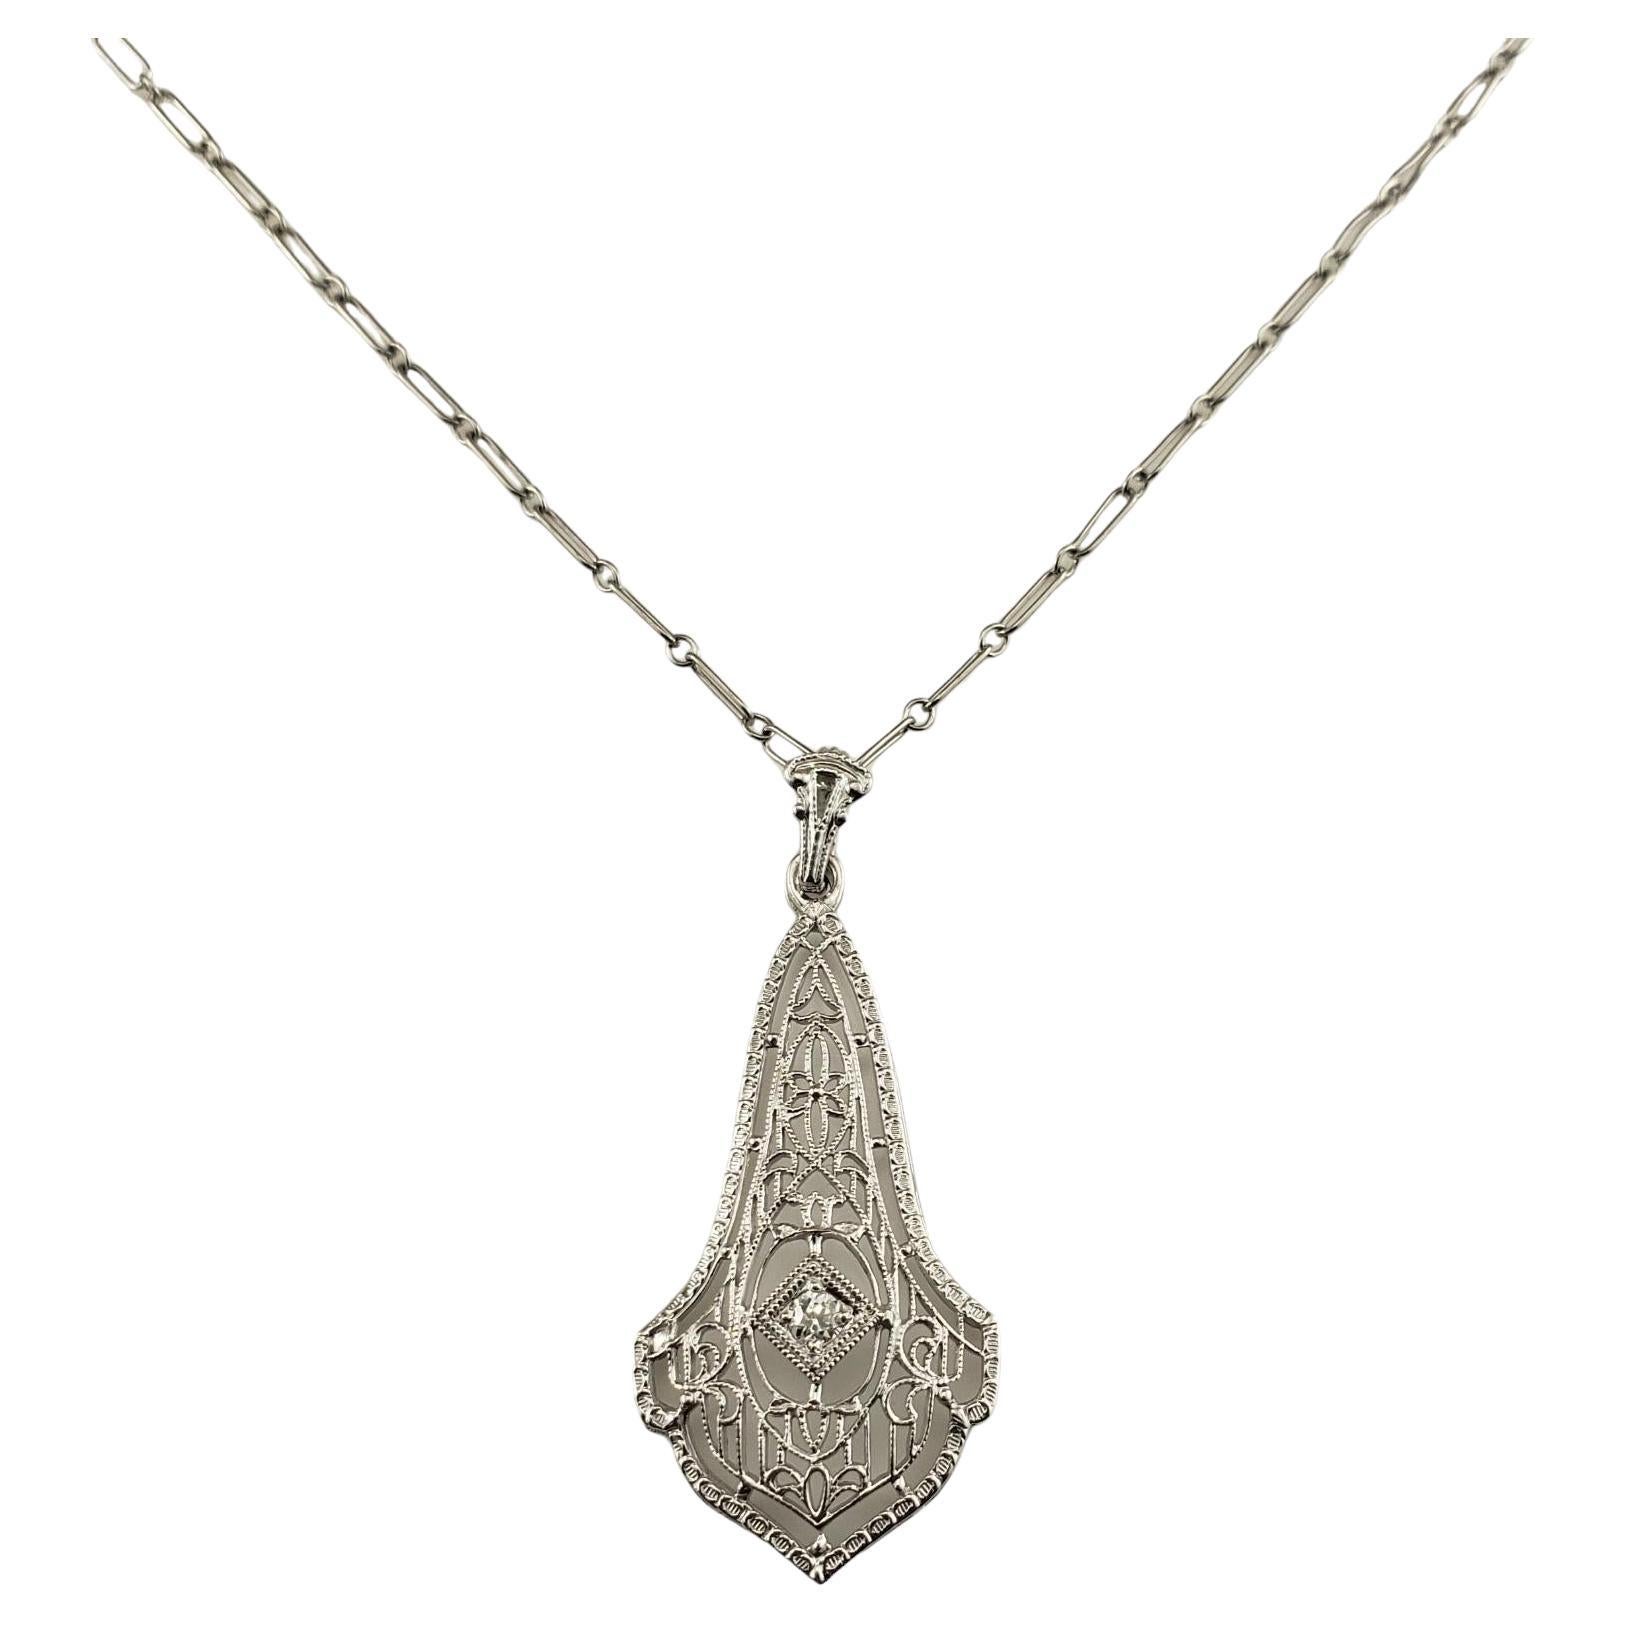 10 Karat White Gold Filigree Diamond Pendant Necklace #16345 For Sale